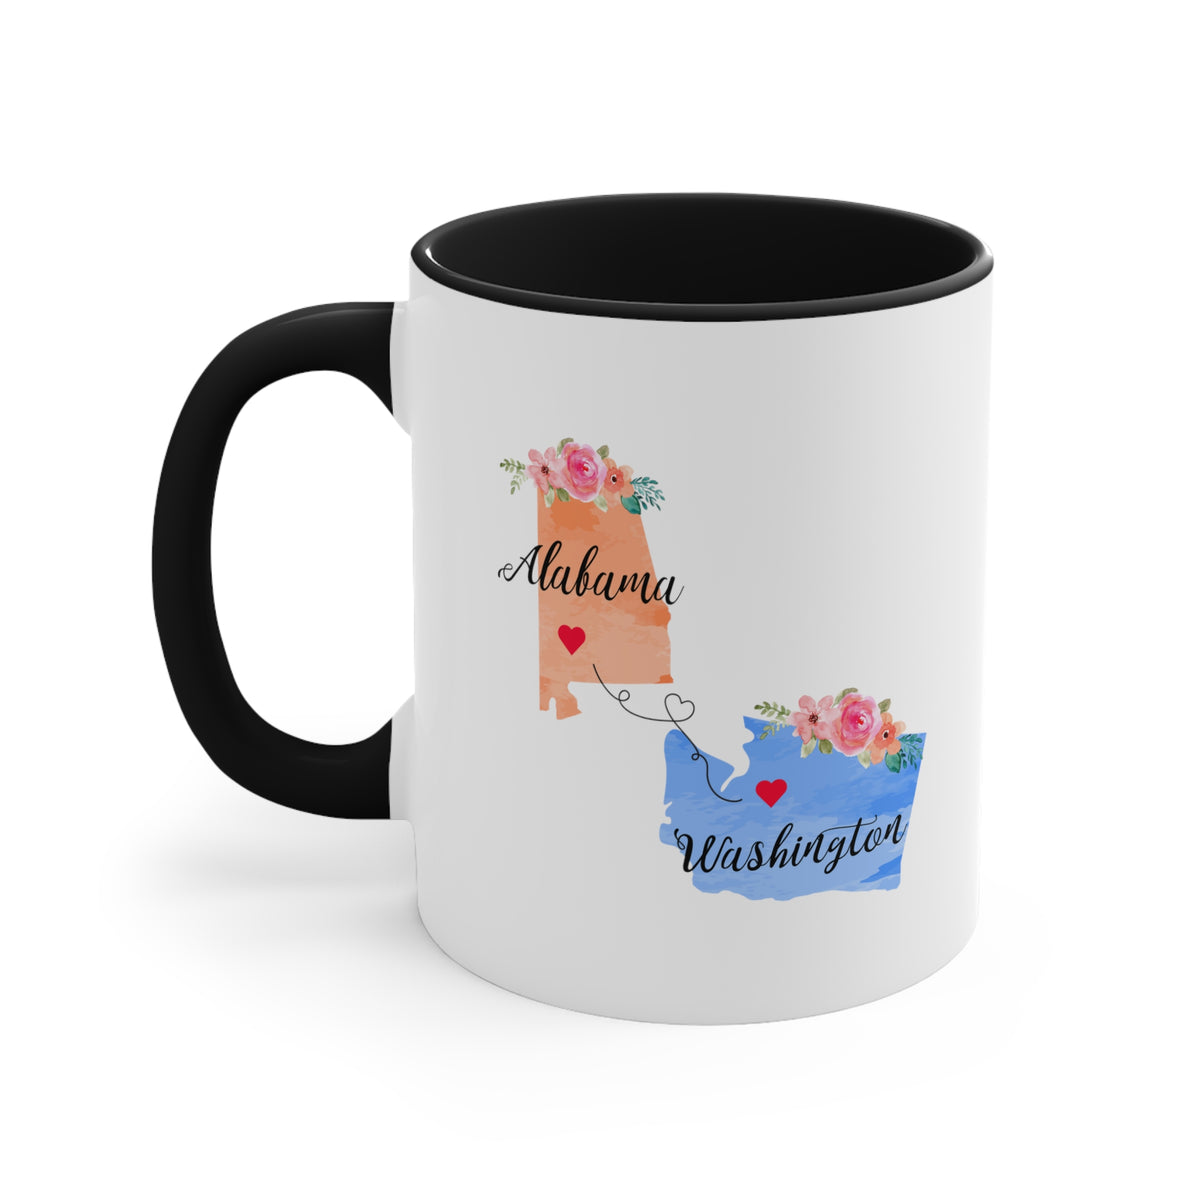 Alabama Washington Gifts | Long Distance State Coffee Mug | State to State | Away From Hometown Family | Moving Away Mug